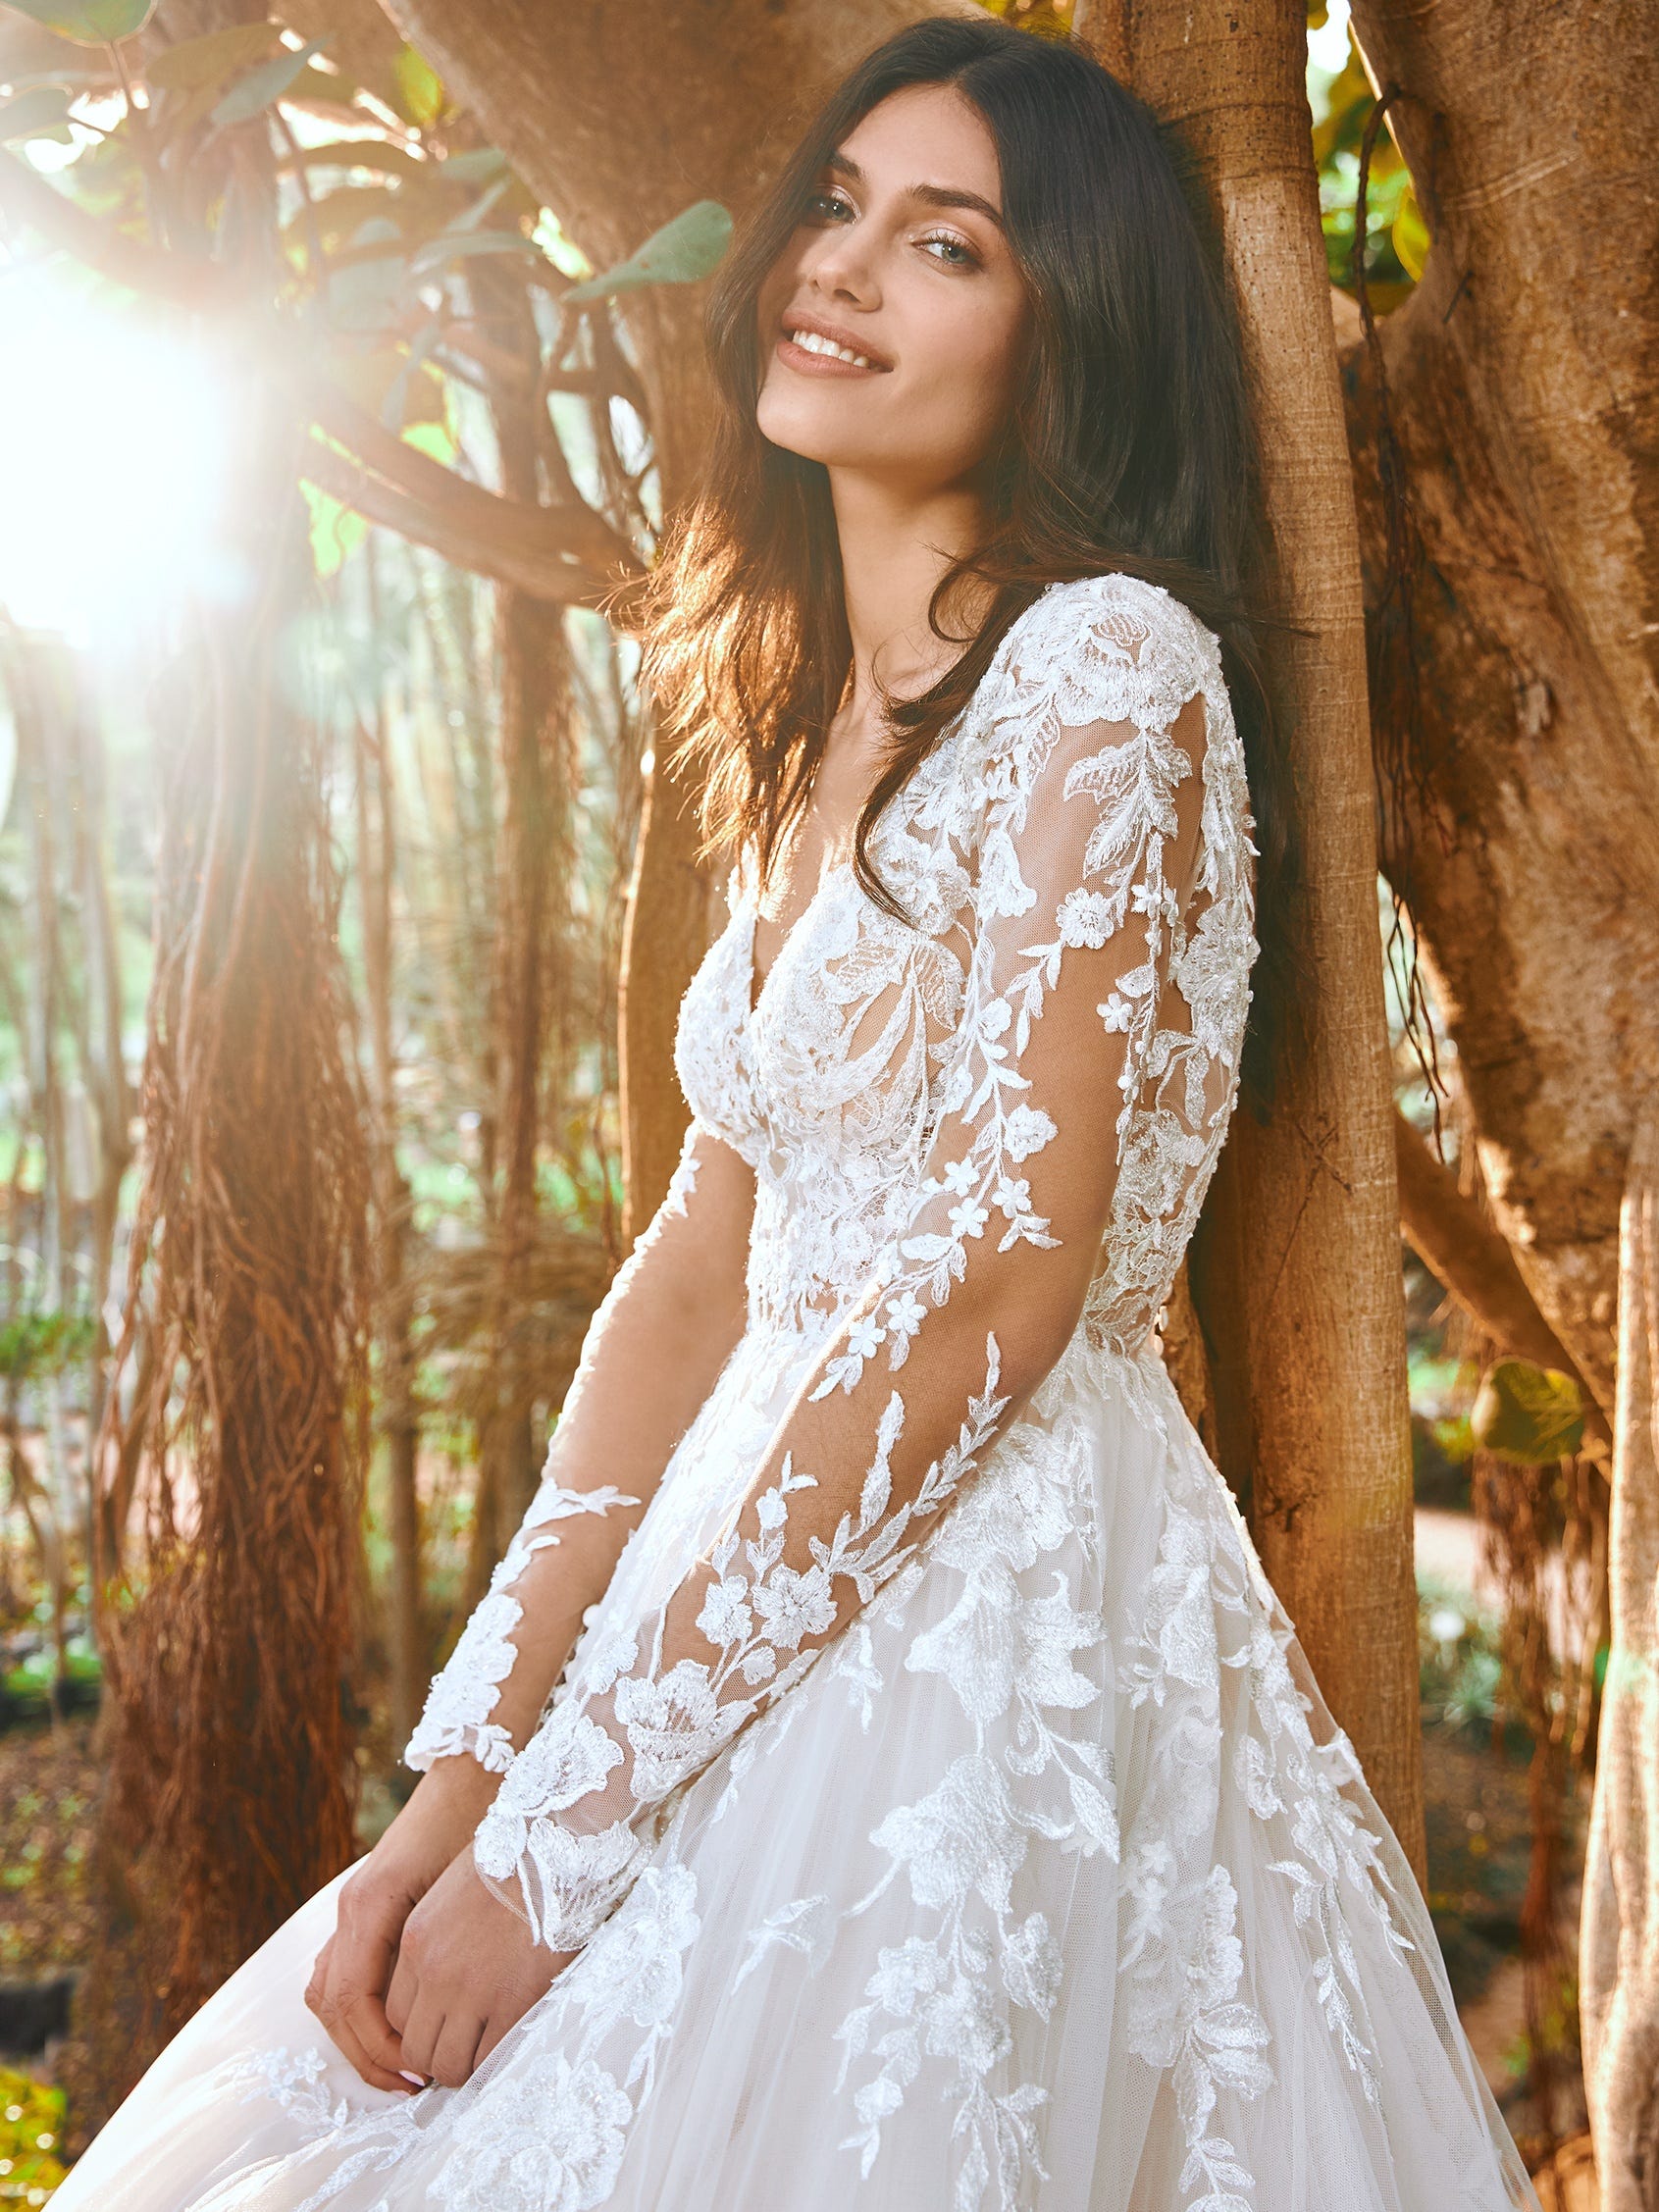 Maroon Bridal Gown Details by FireflyPath on DeviantArt